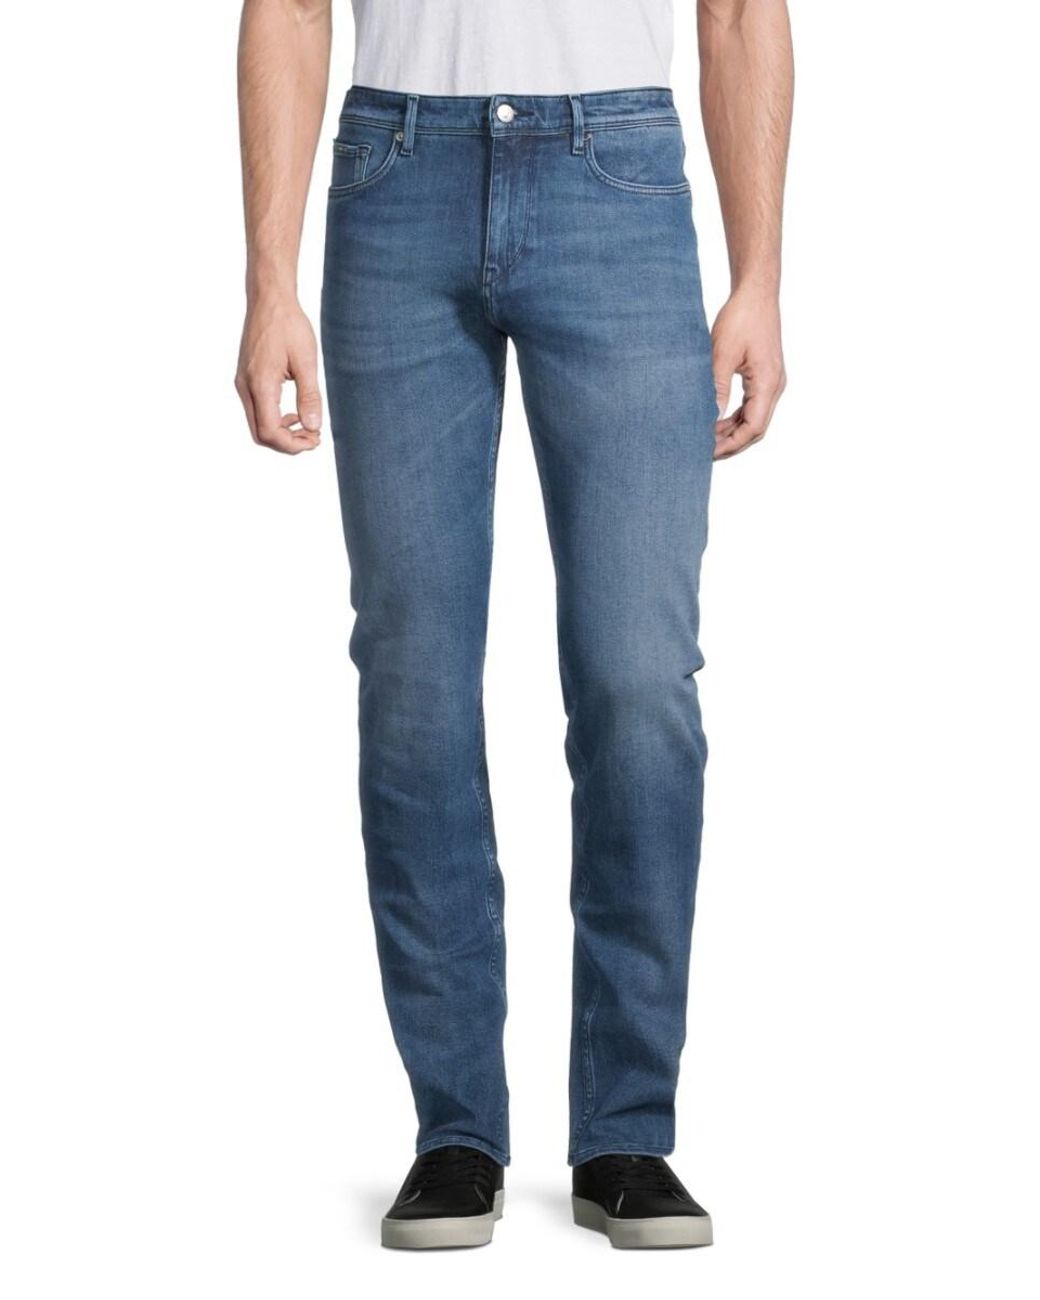 hugo boss charleston 3 jeans Off 58% - canerofset.com